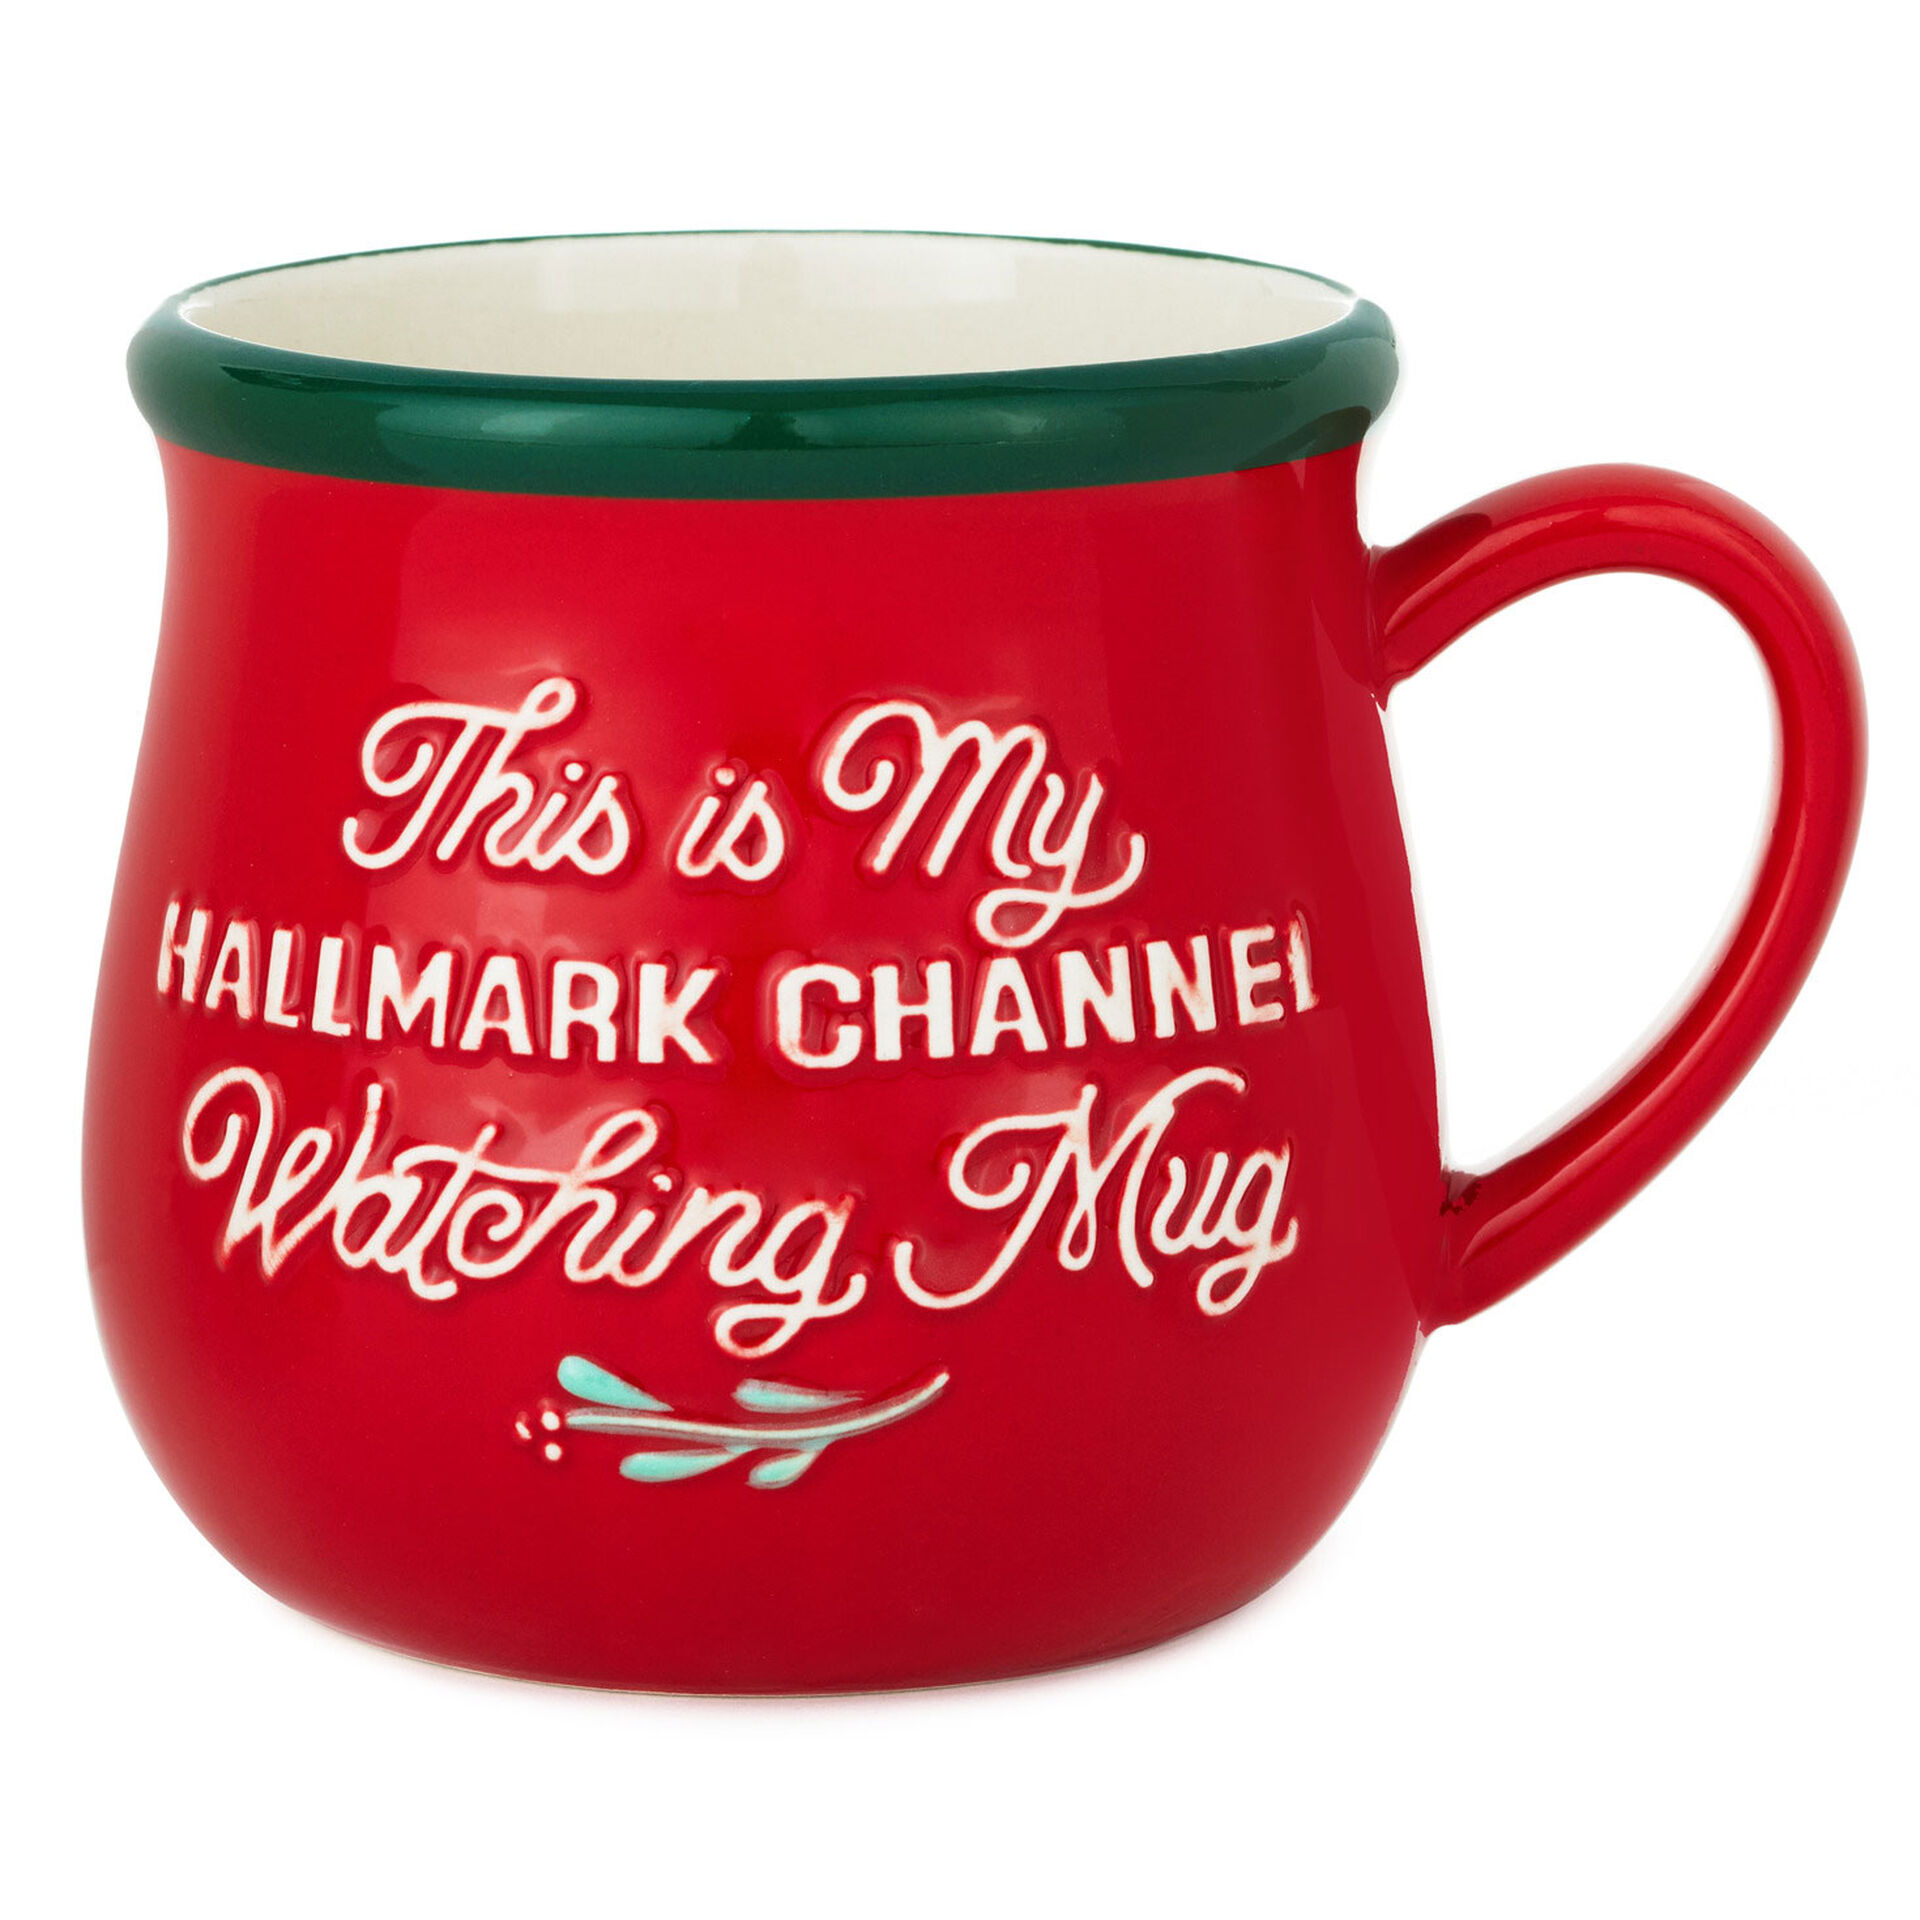 Hallmark Channel Christmas movies